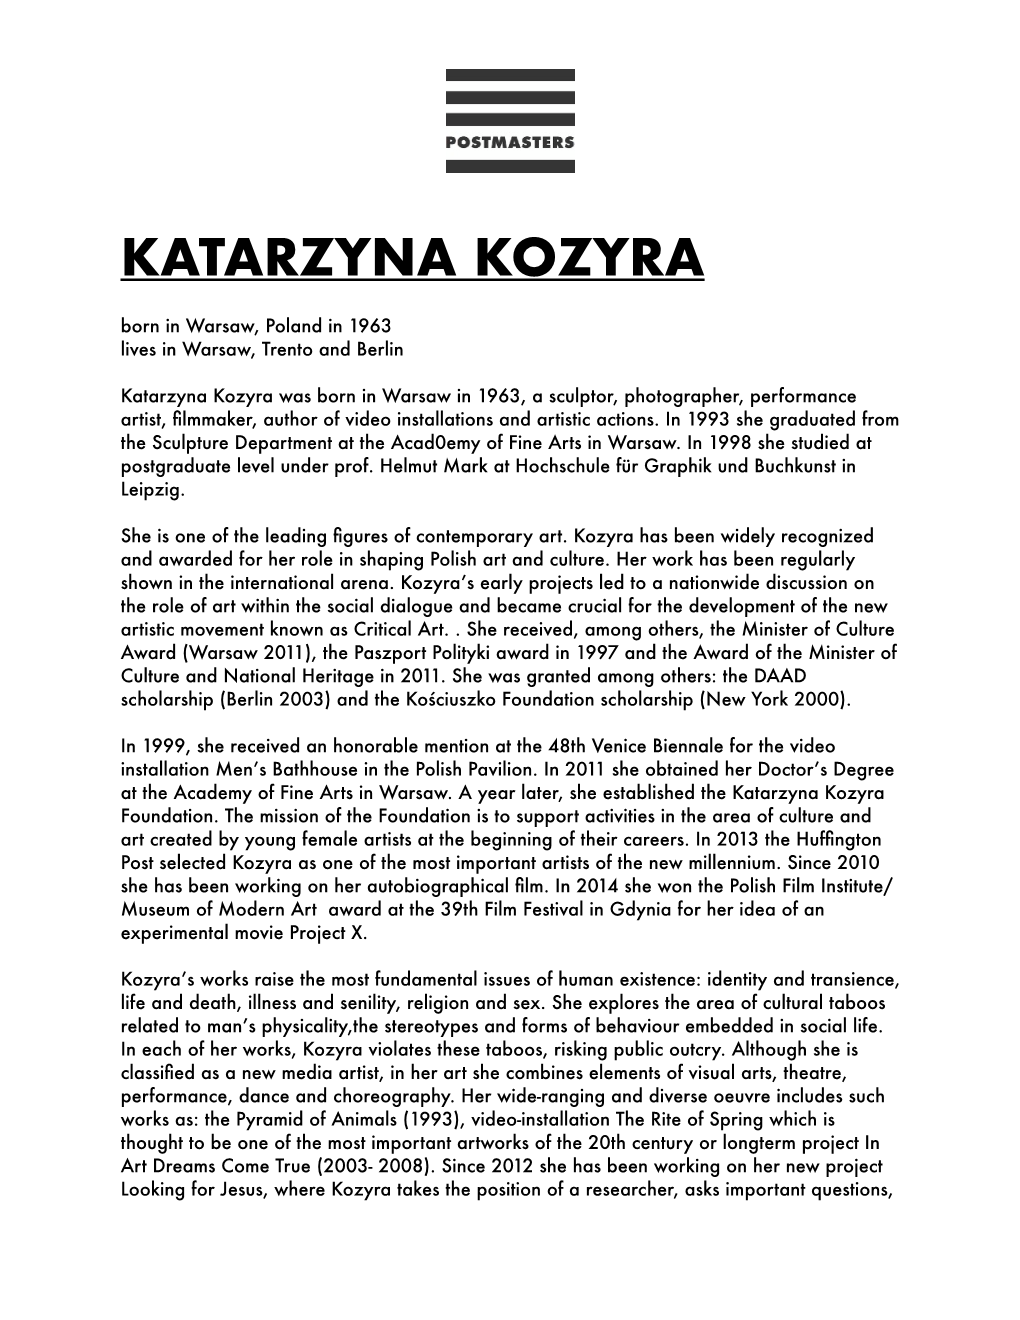 KATARZYNA KOZYRA Born in Warsaw, Poland in 1963 Lives in Warsaw, Trento and Berlin